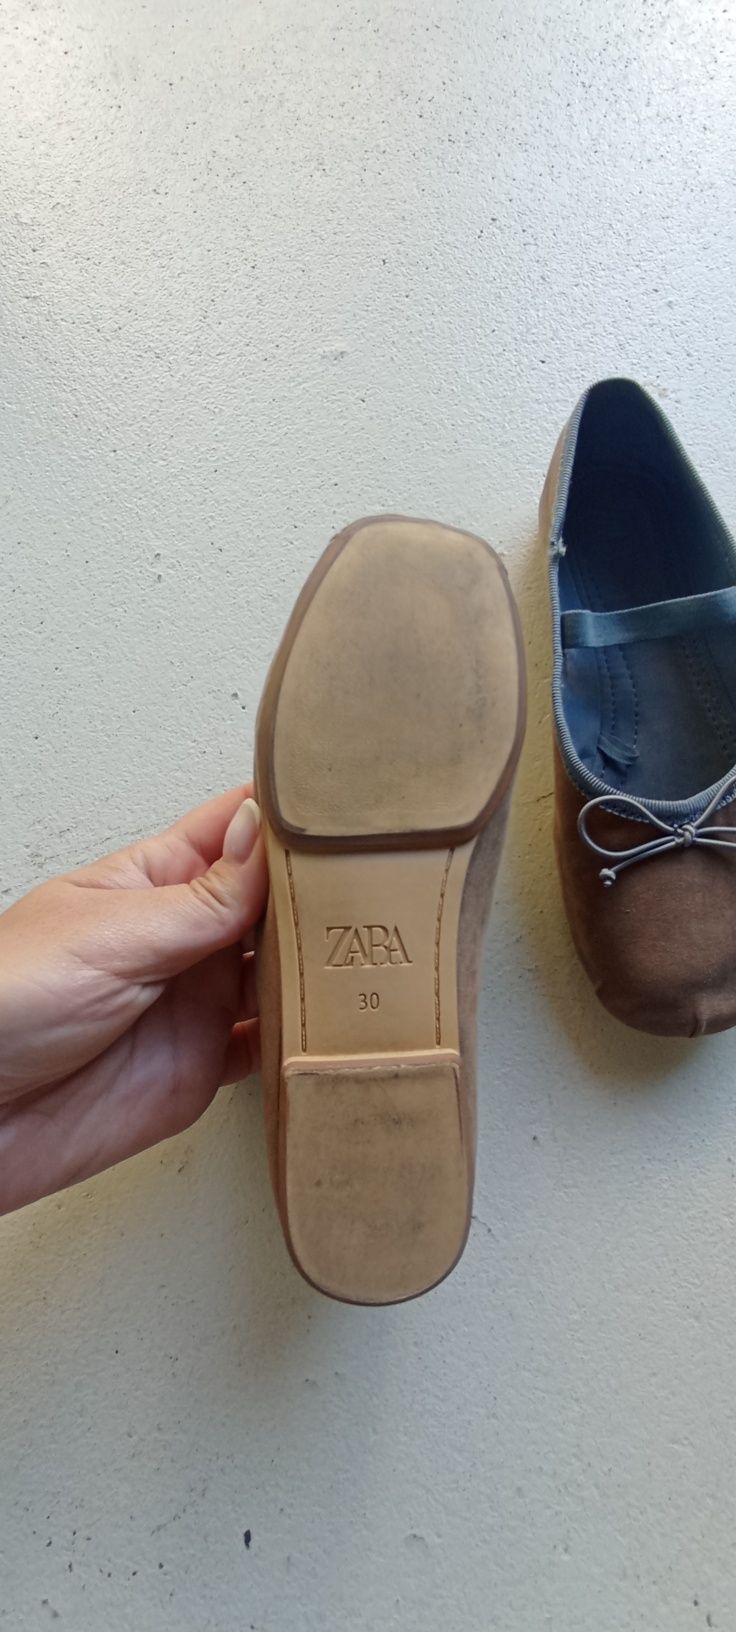 Baletki Zara 30 buty zara